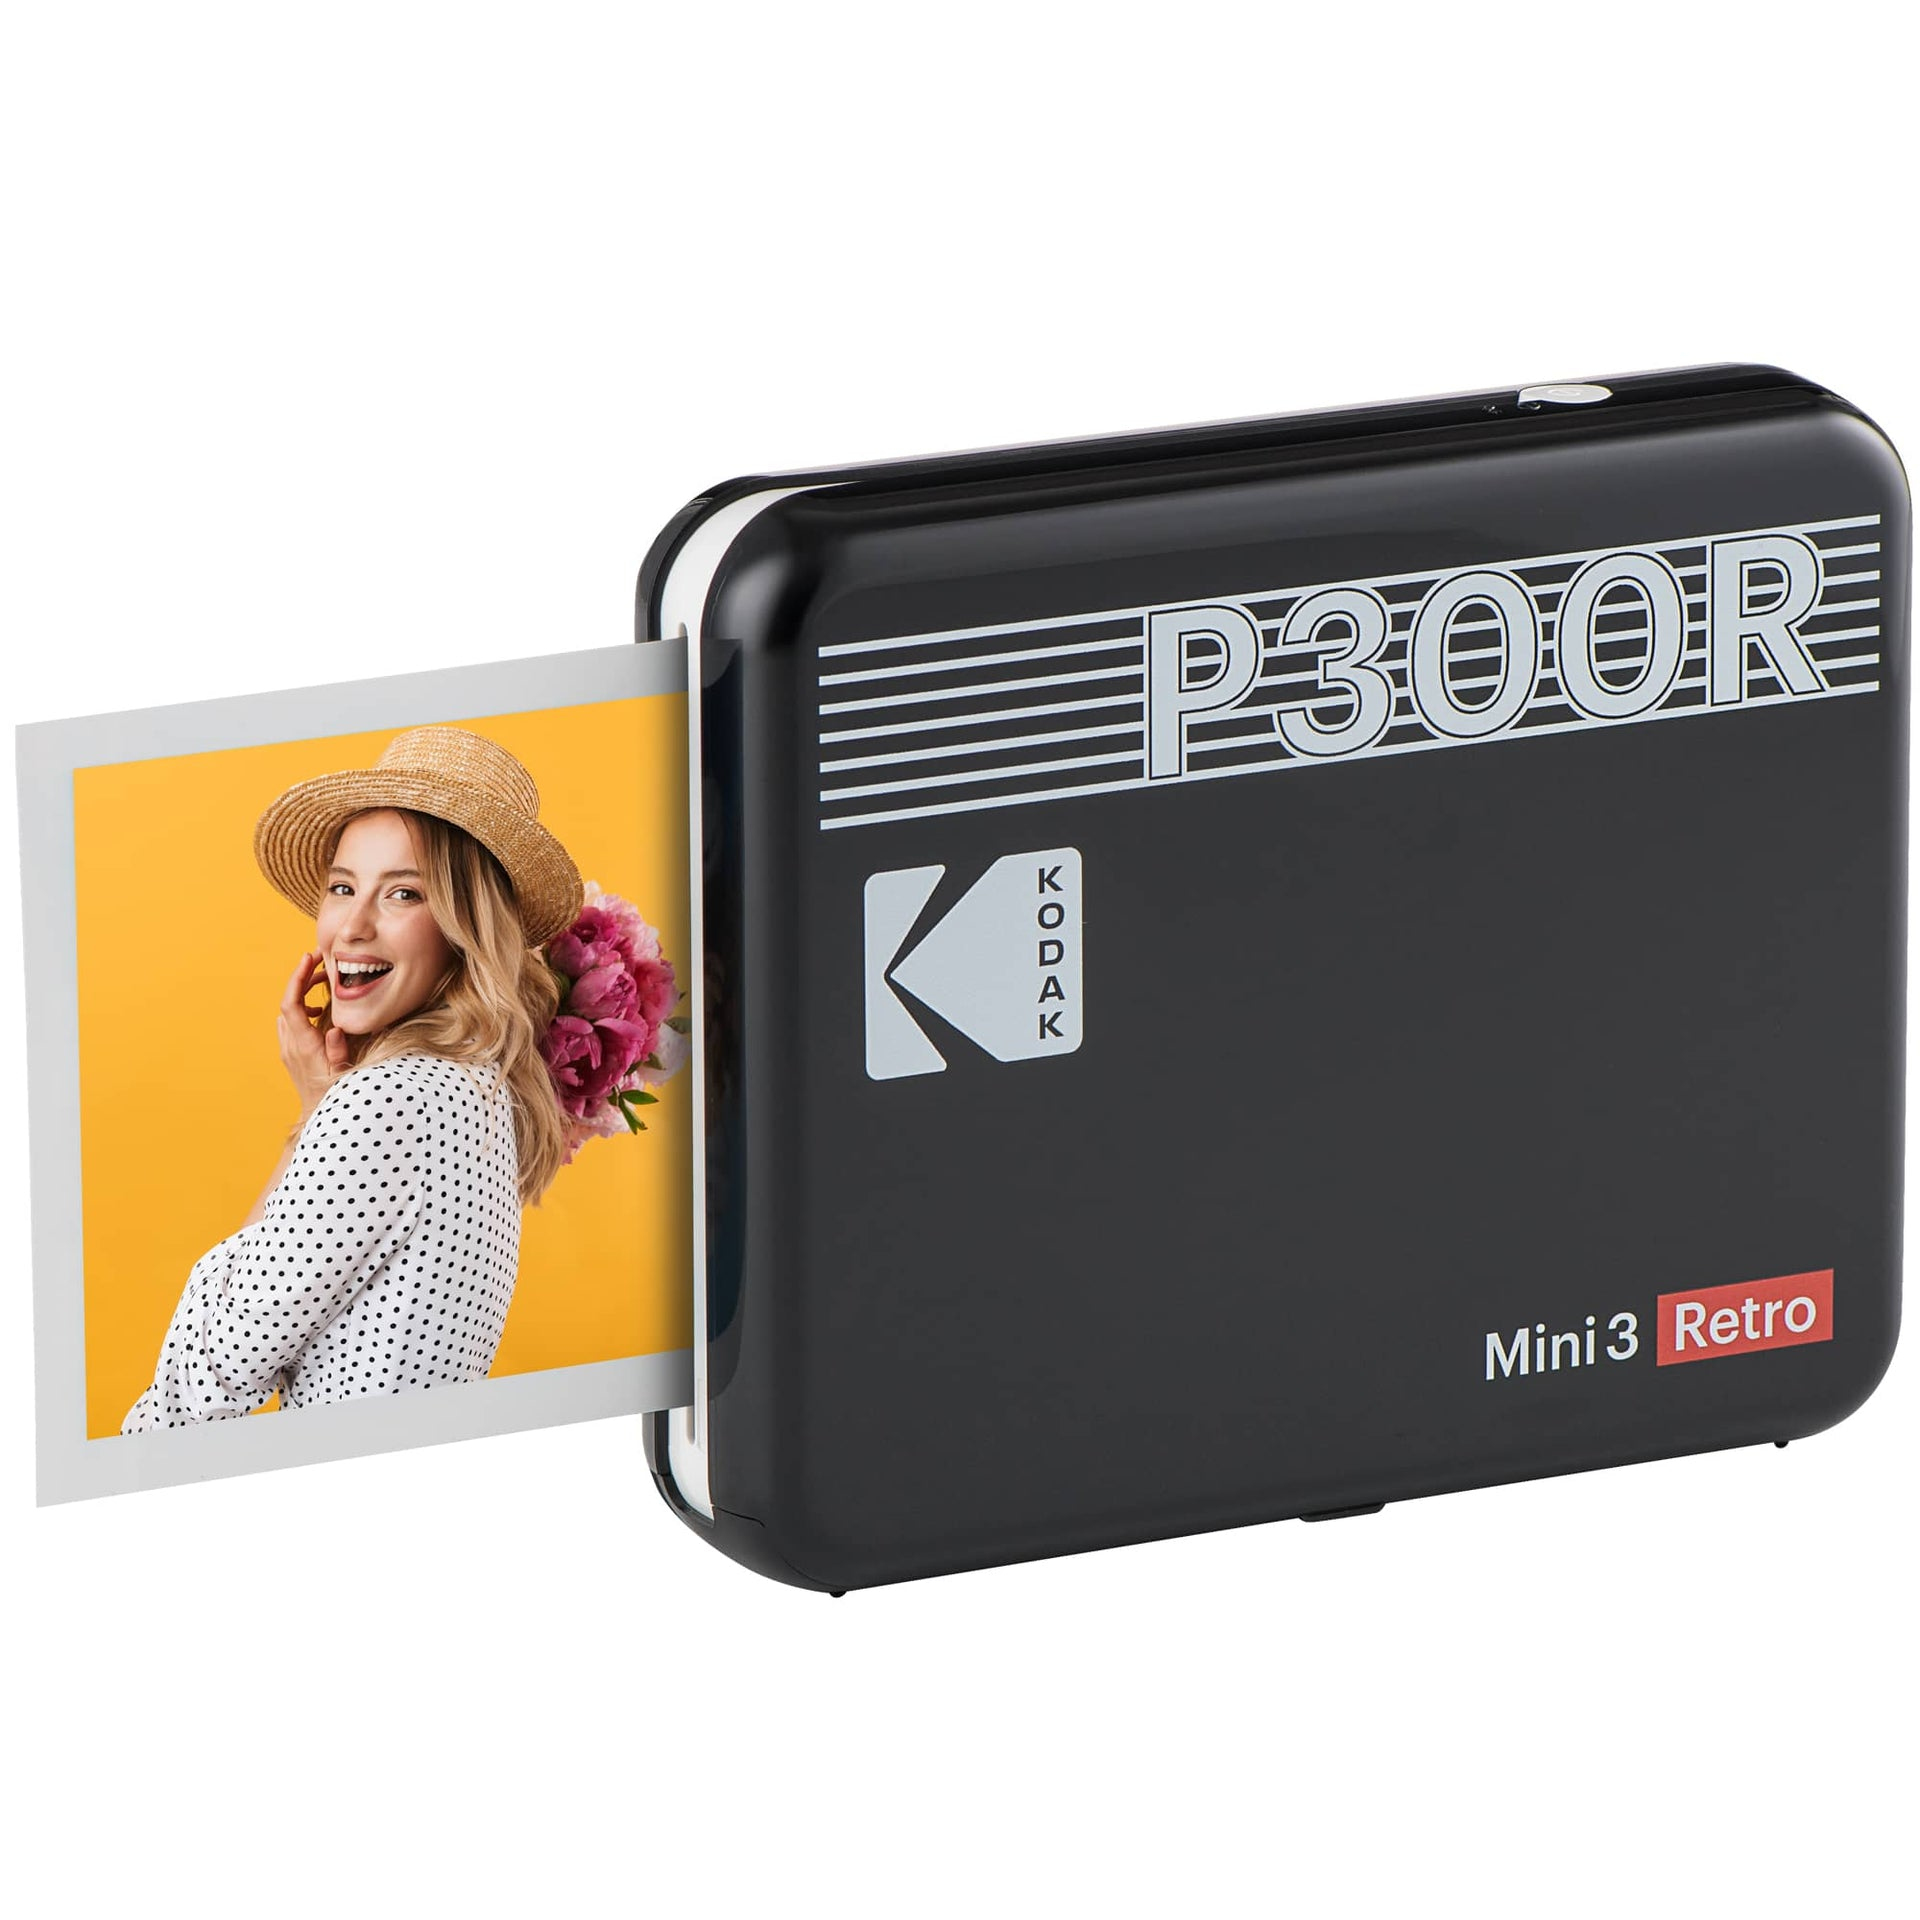 Kodak Mini 3 Retro